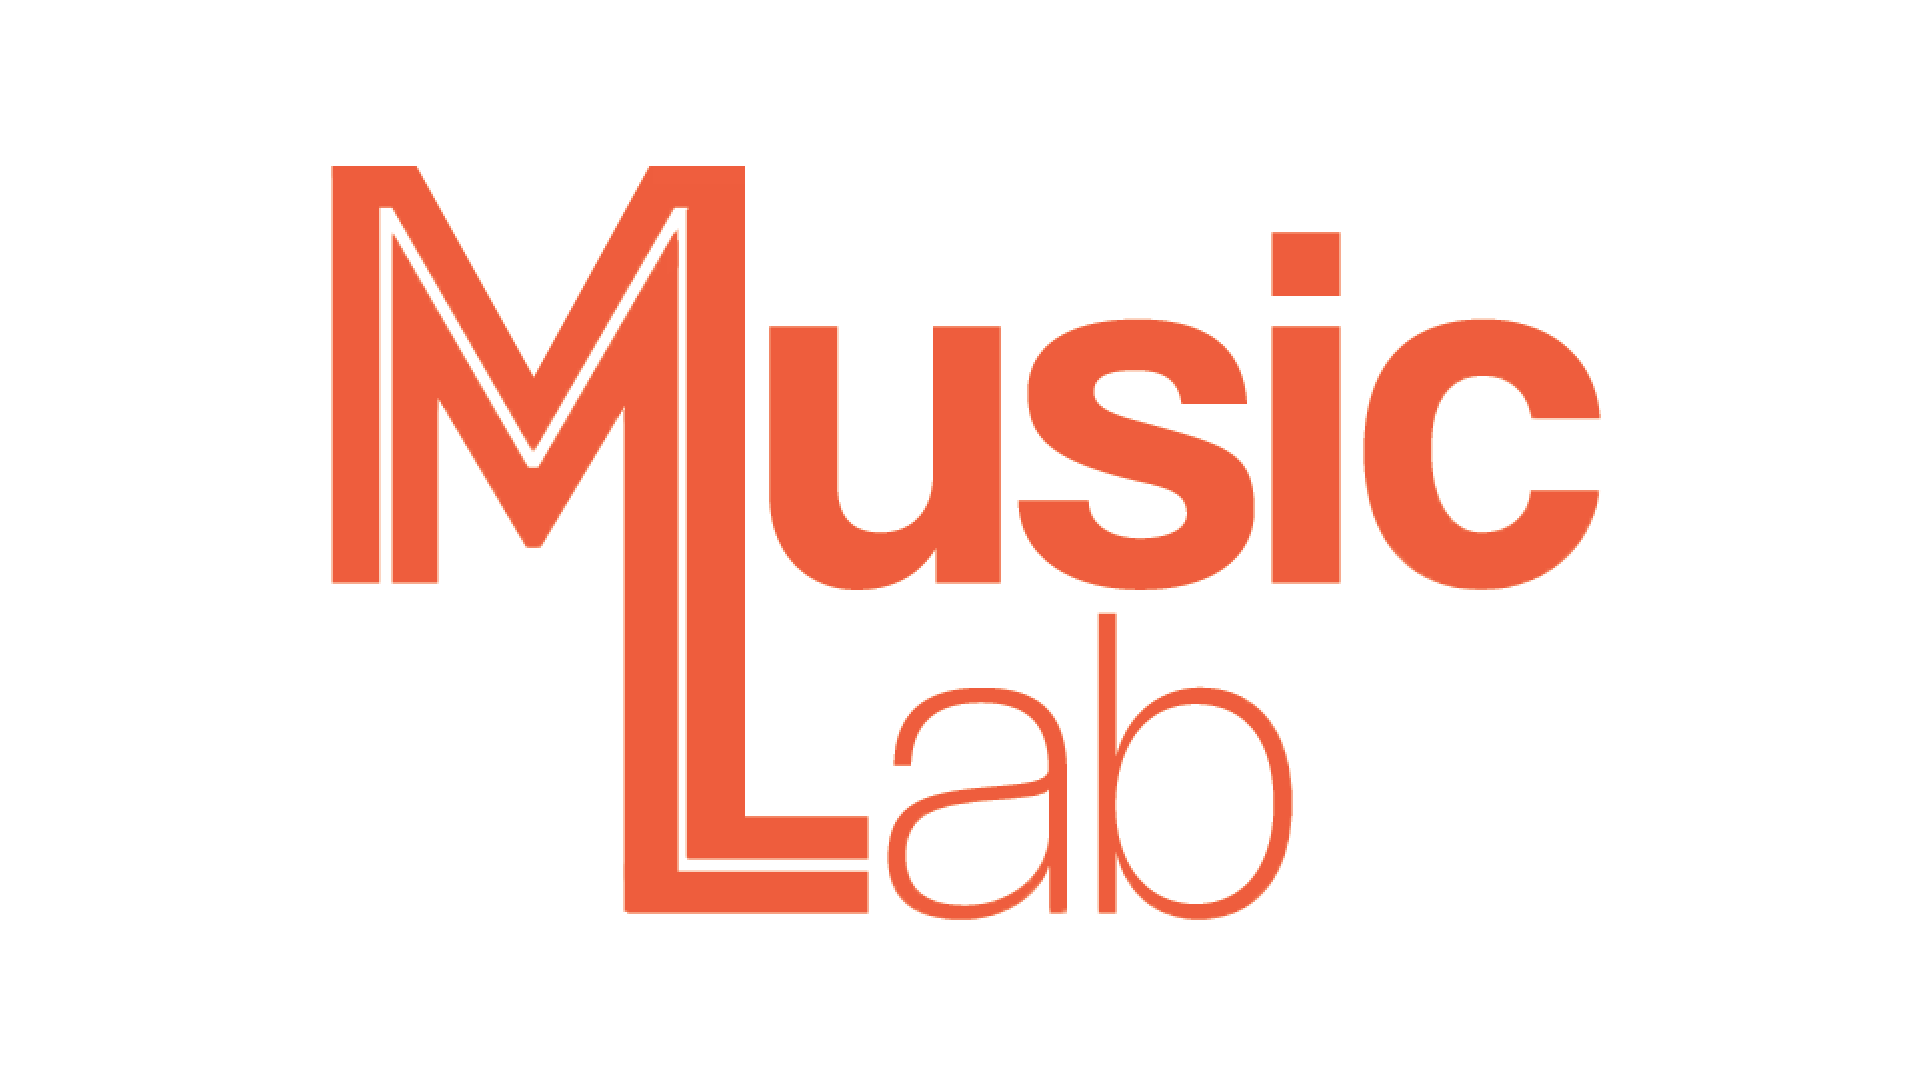 MusicLab